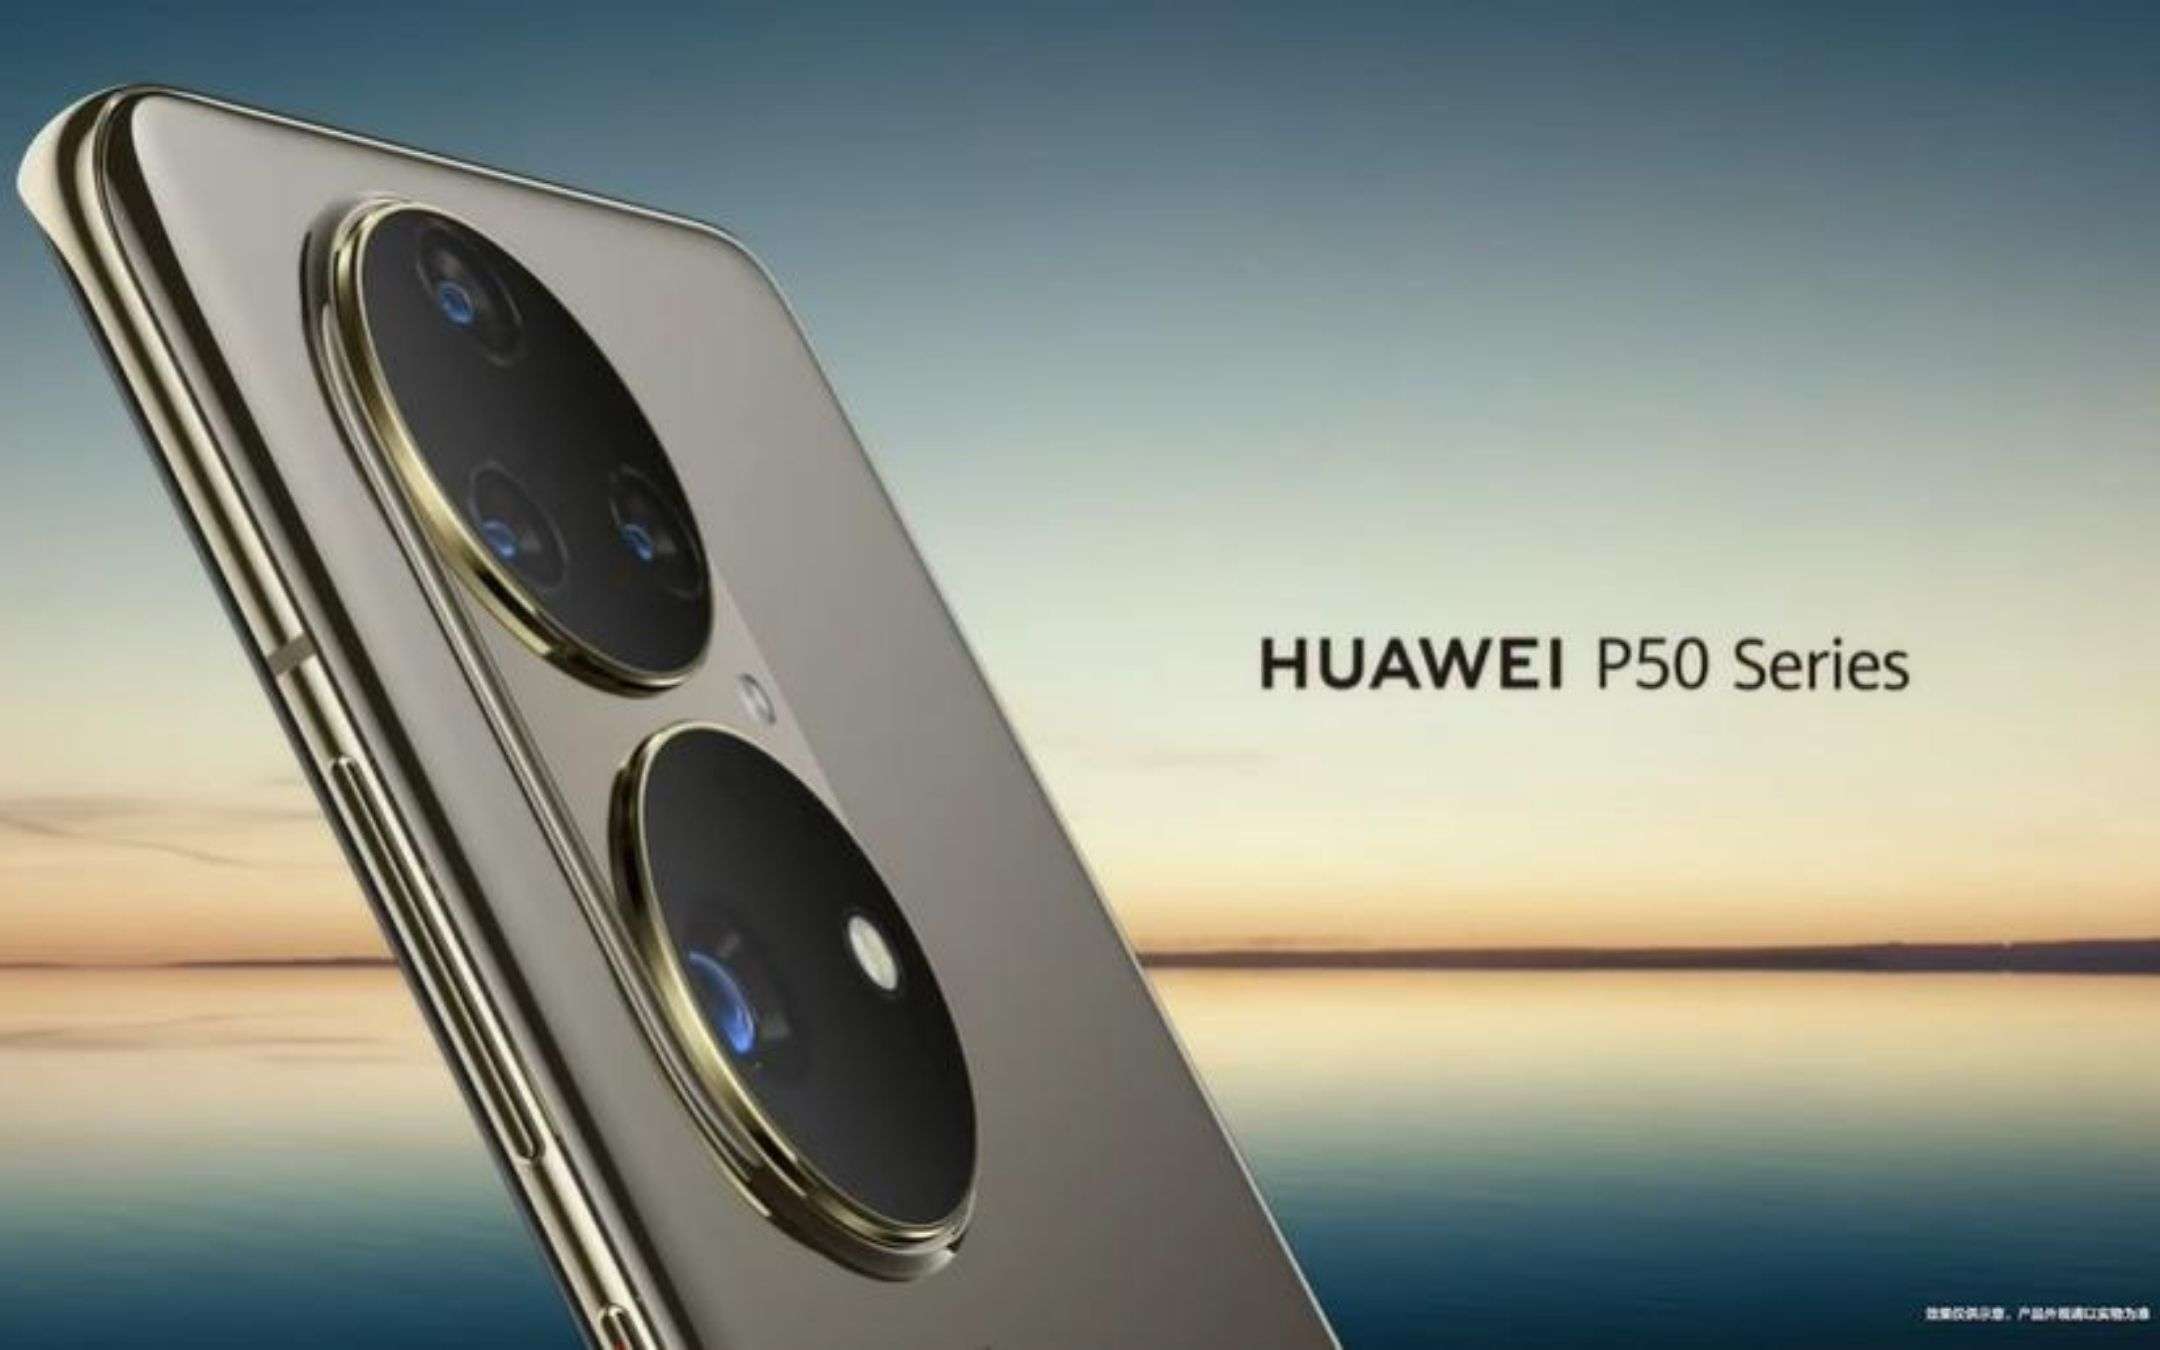 Huawei P50: in arrivo con lo Snapdragon 888 4G